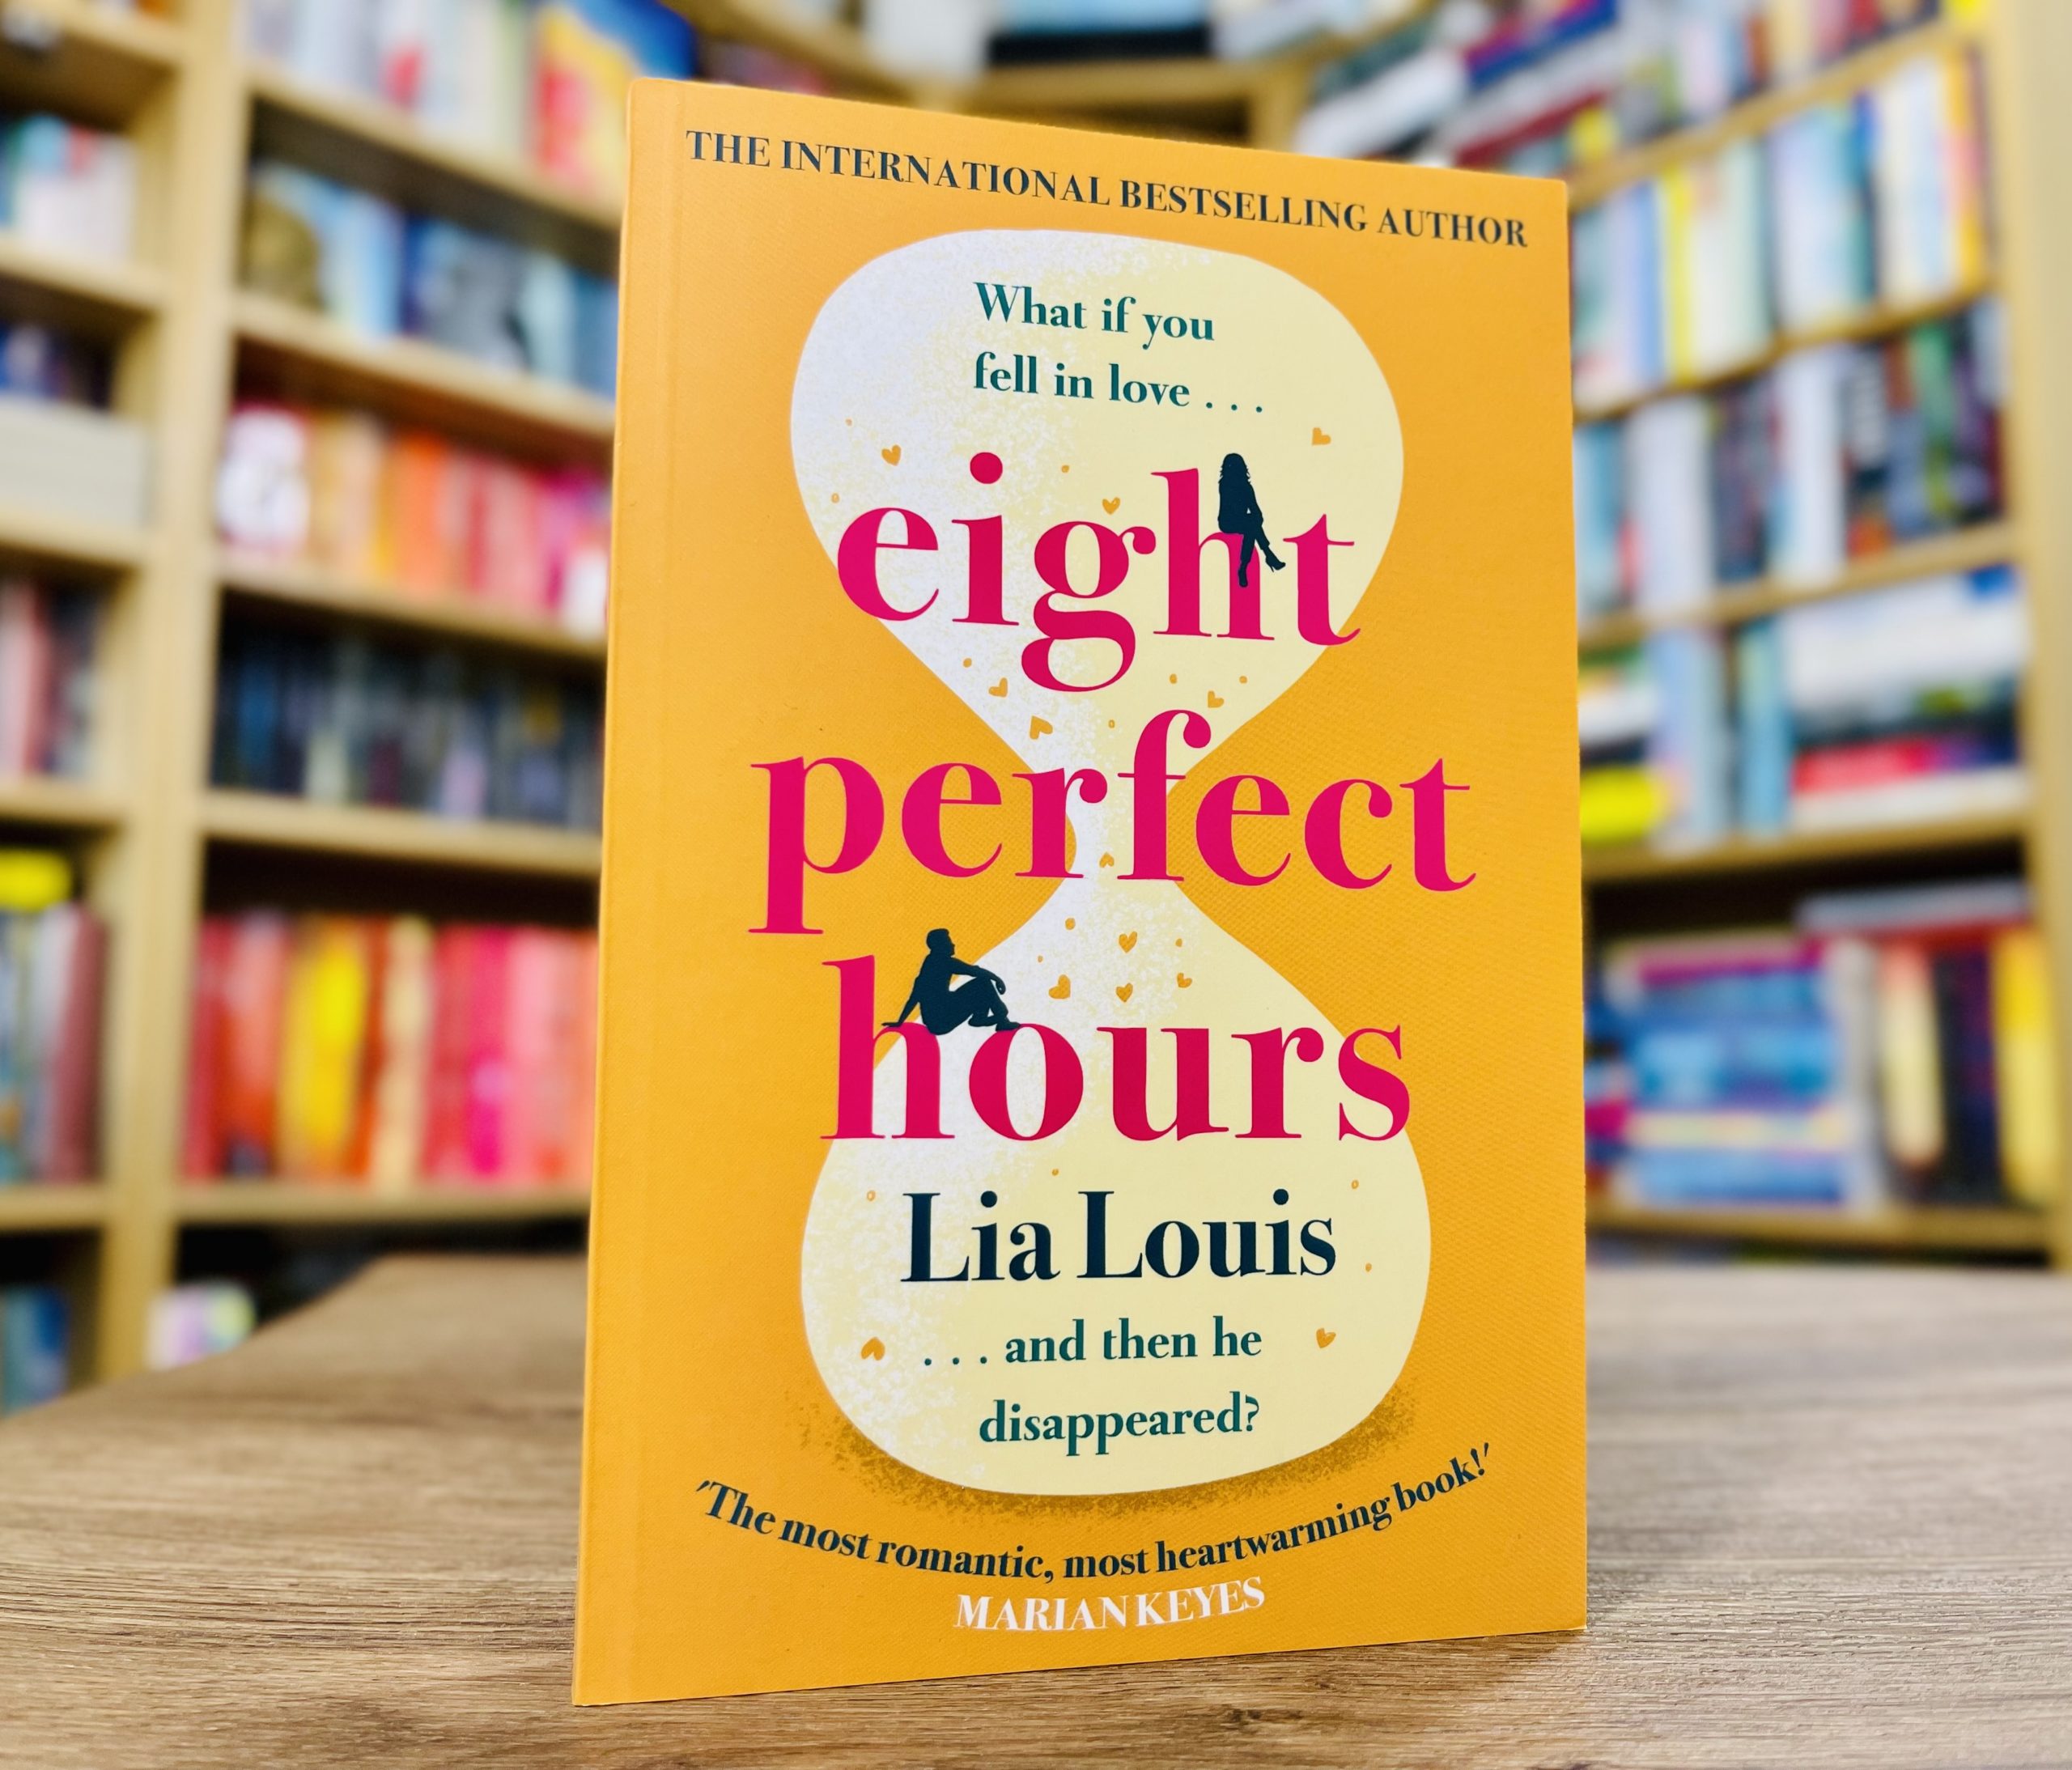 Eight Perfect Hours: A Novel: Louis, Lia: 9781982135942: : Books